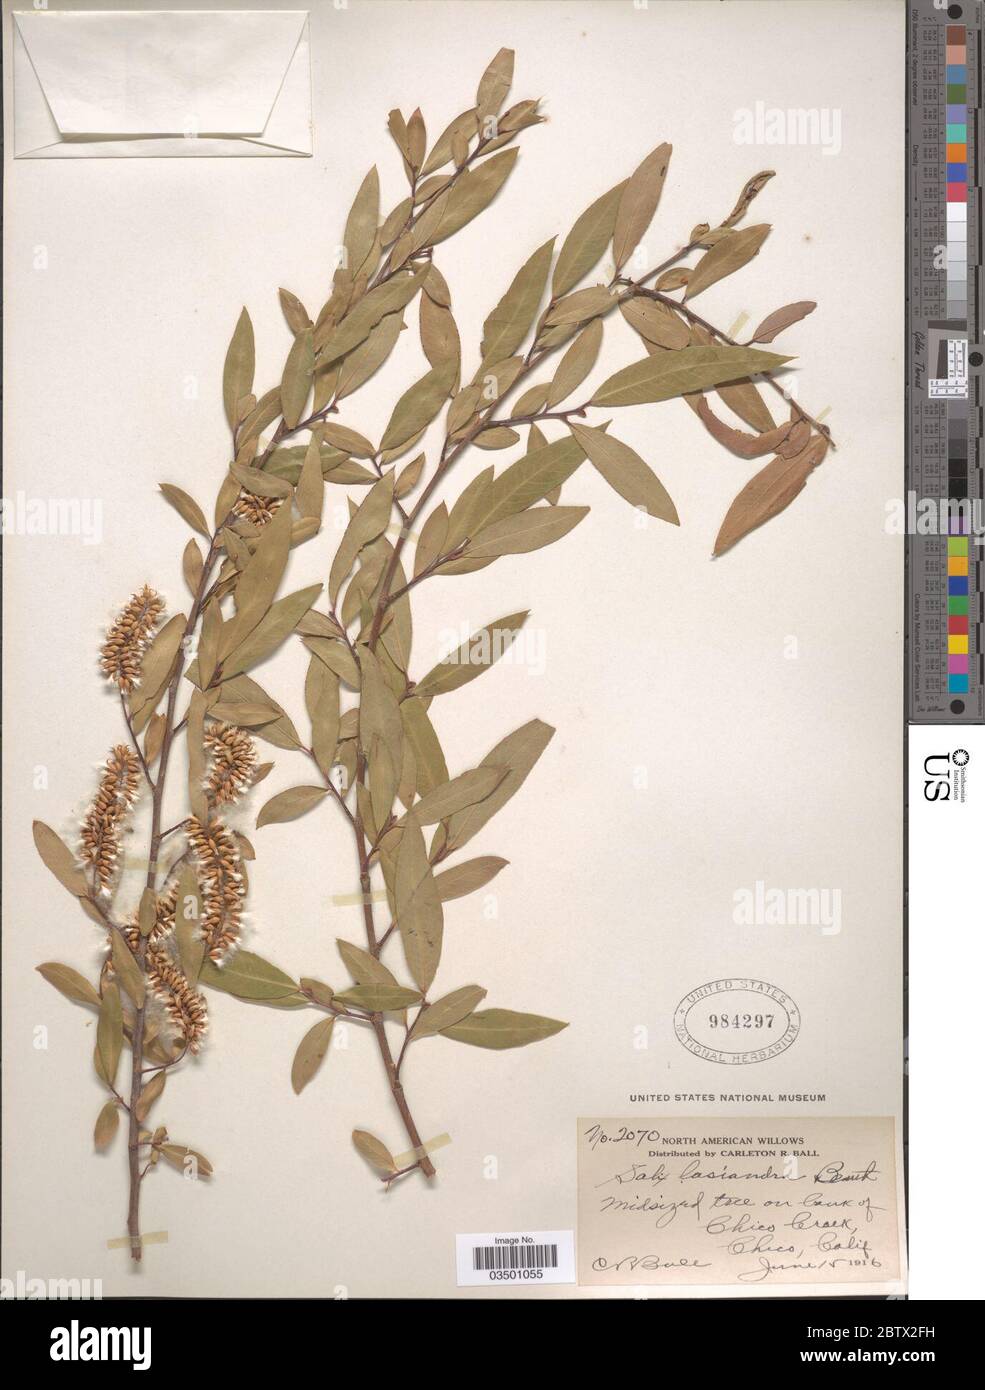 Salix lasiandra Benth. Stock Photo